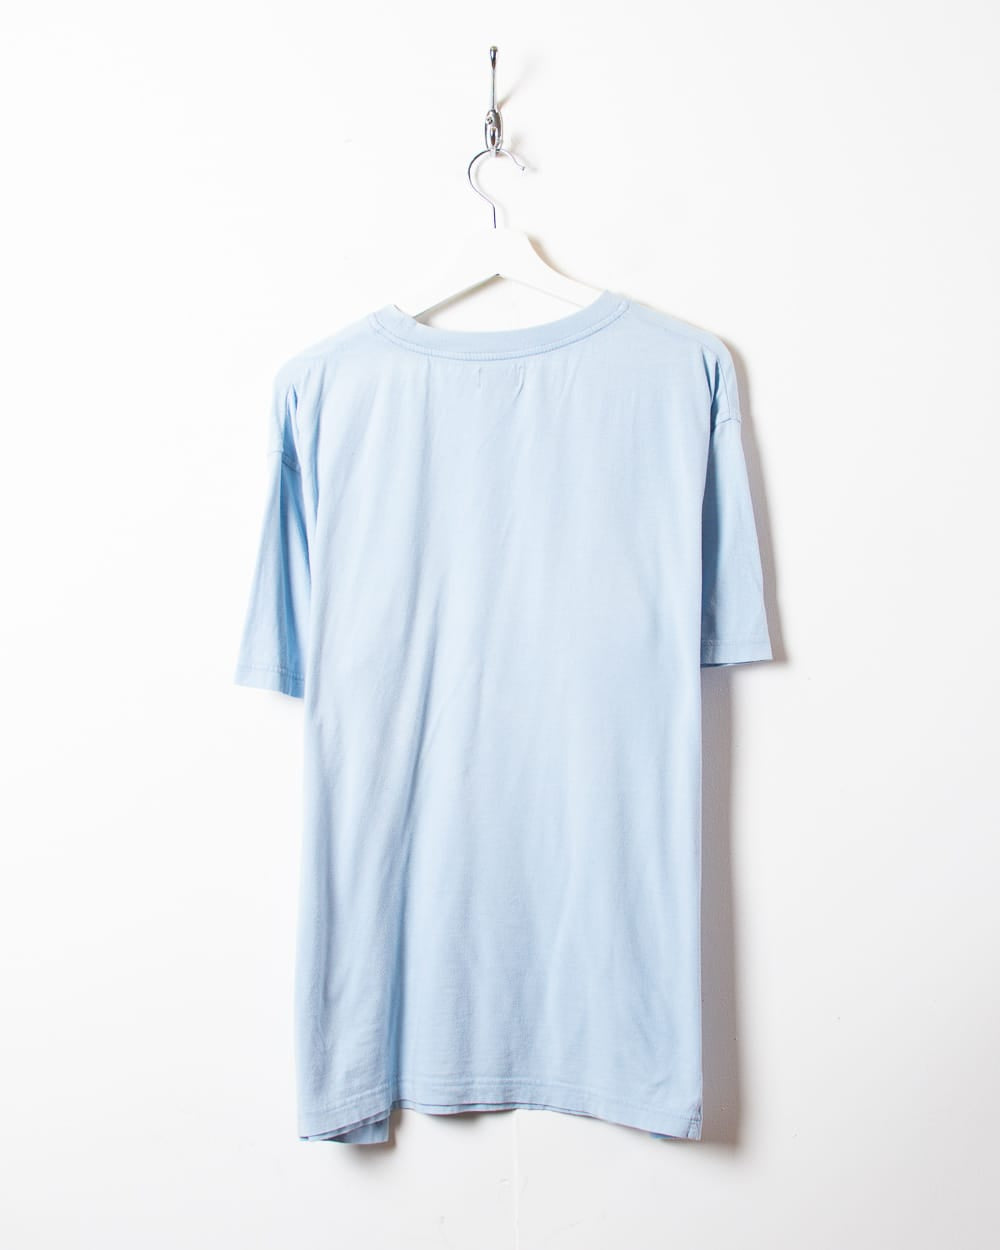 BabyBlue Kappa T-Shirt - X-Large